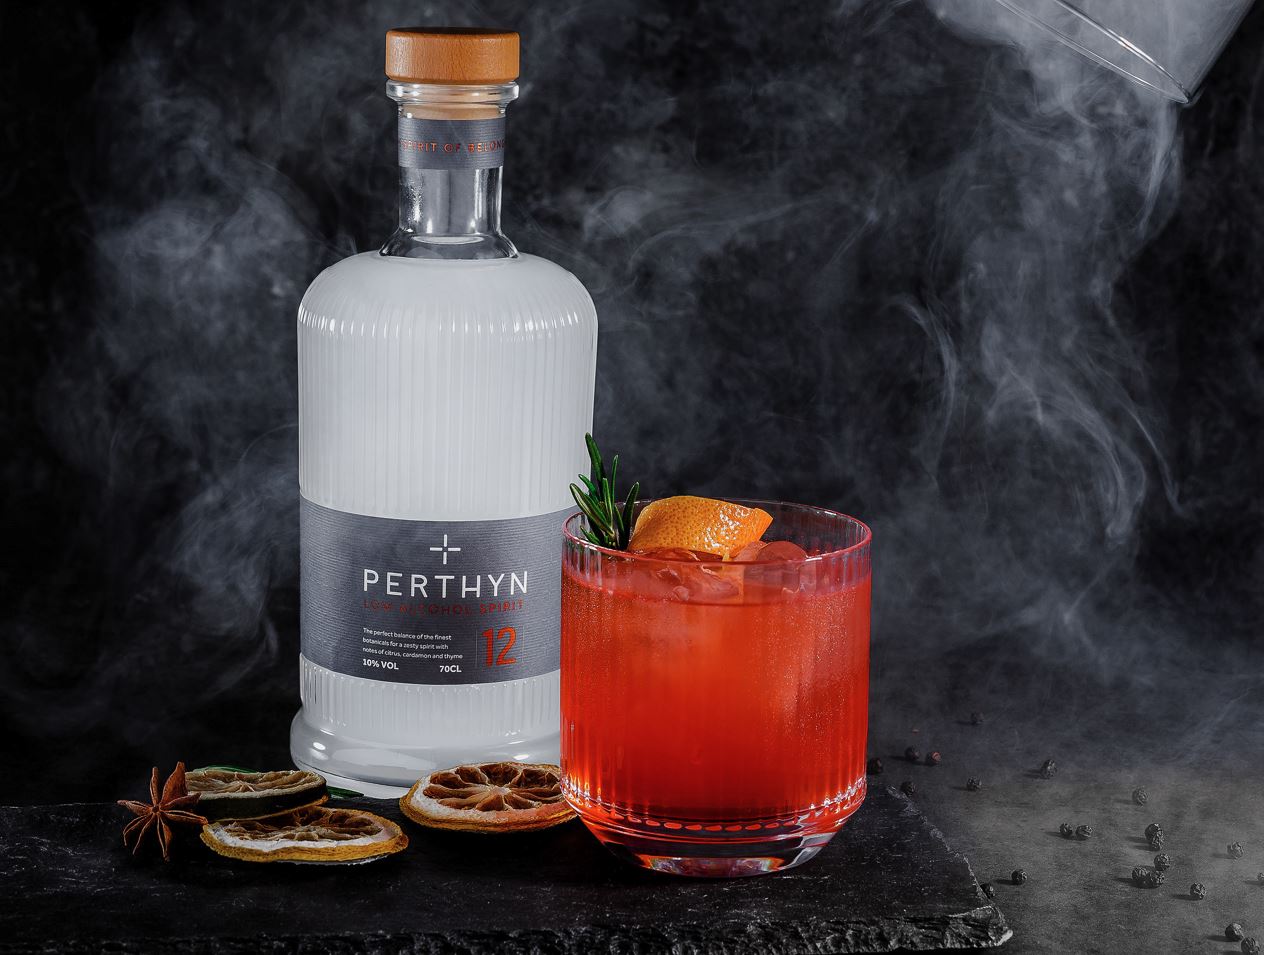 Perthyn low alcohol spirit